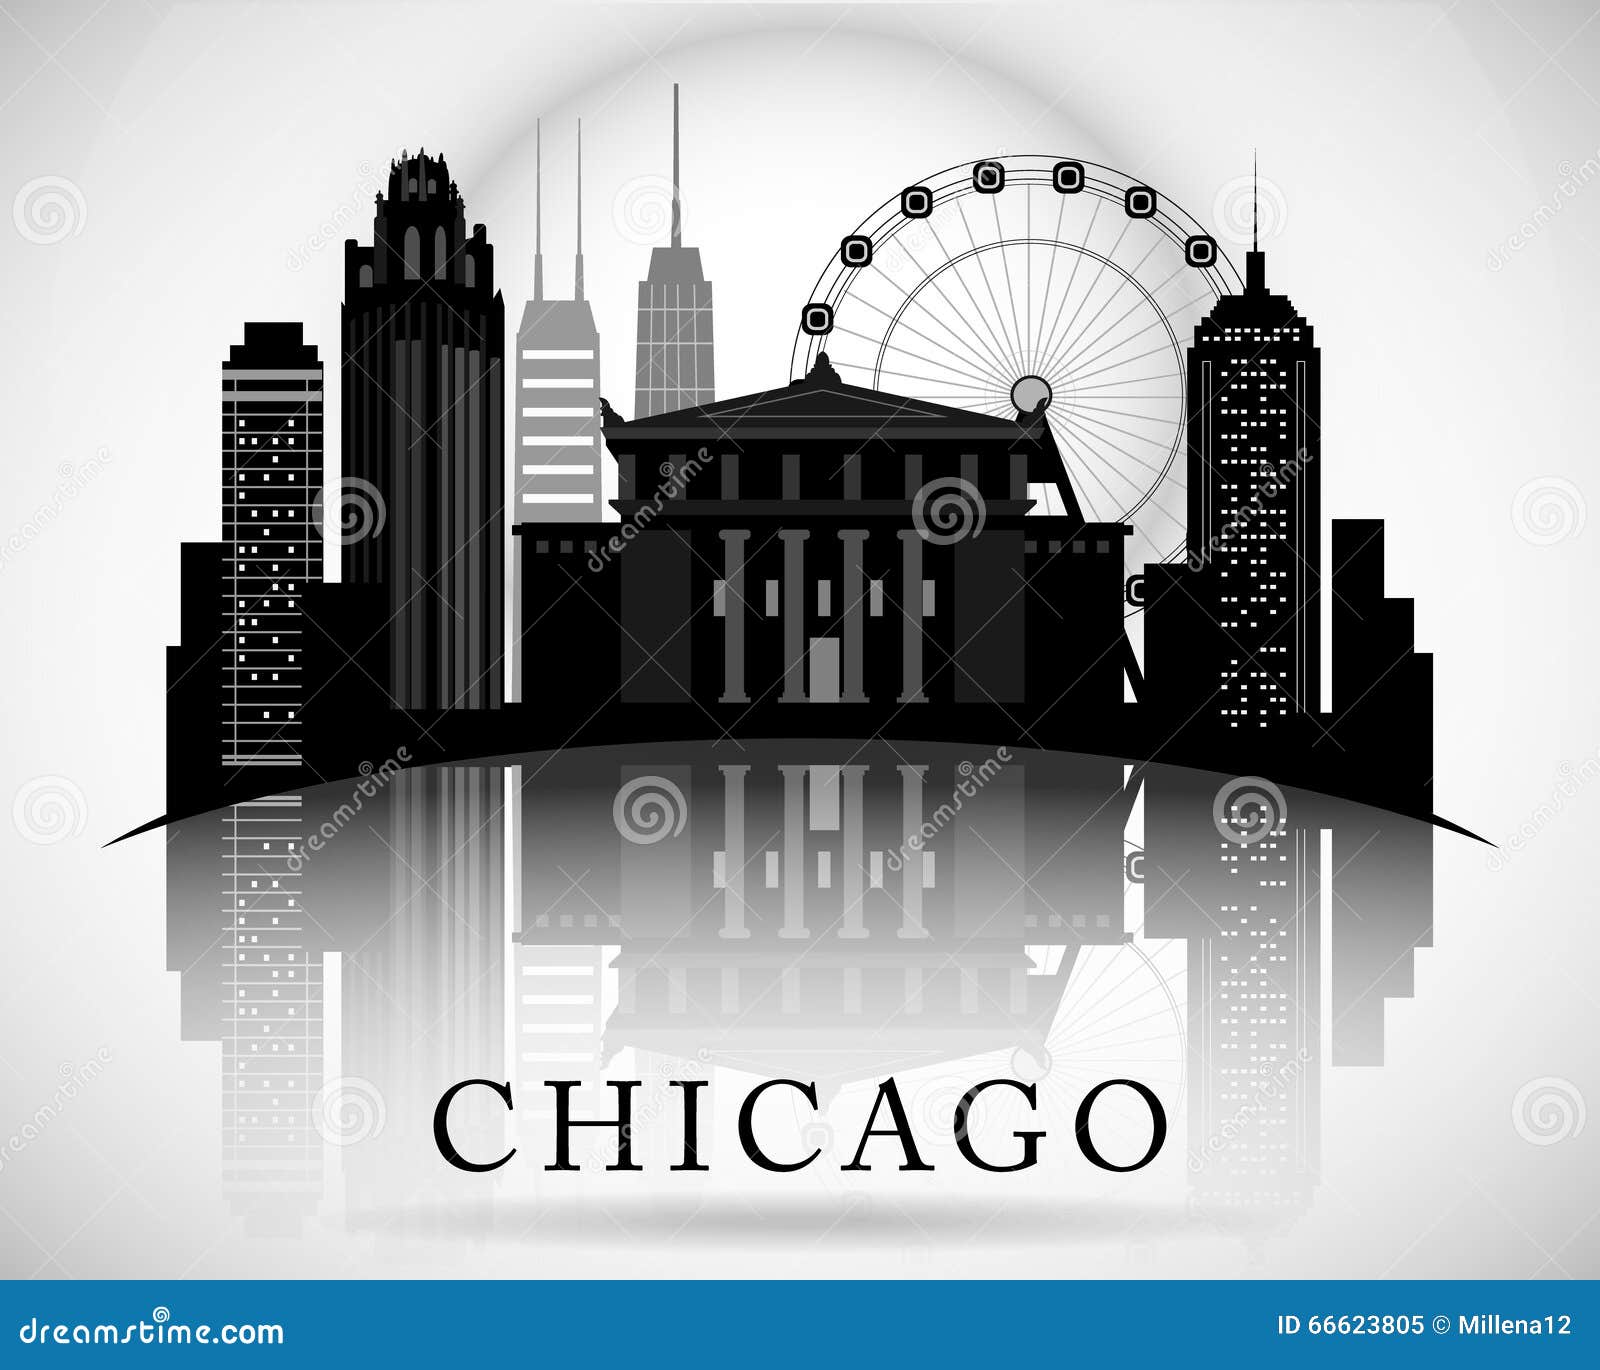 chicago illinois city skyline silhouette. typographic 